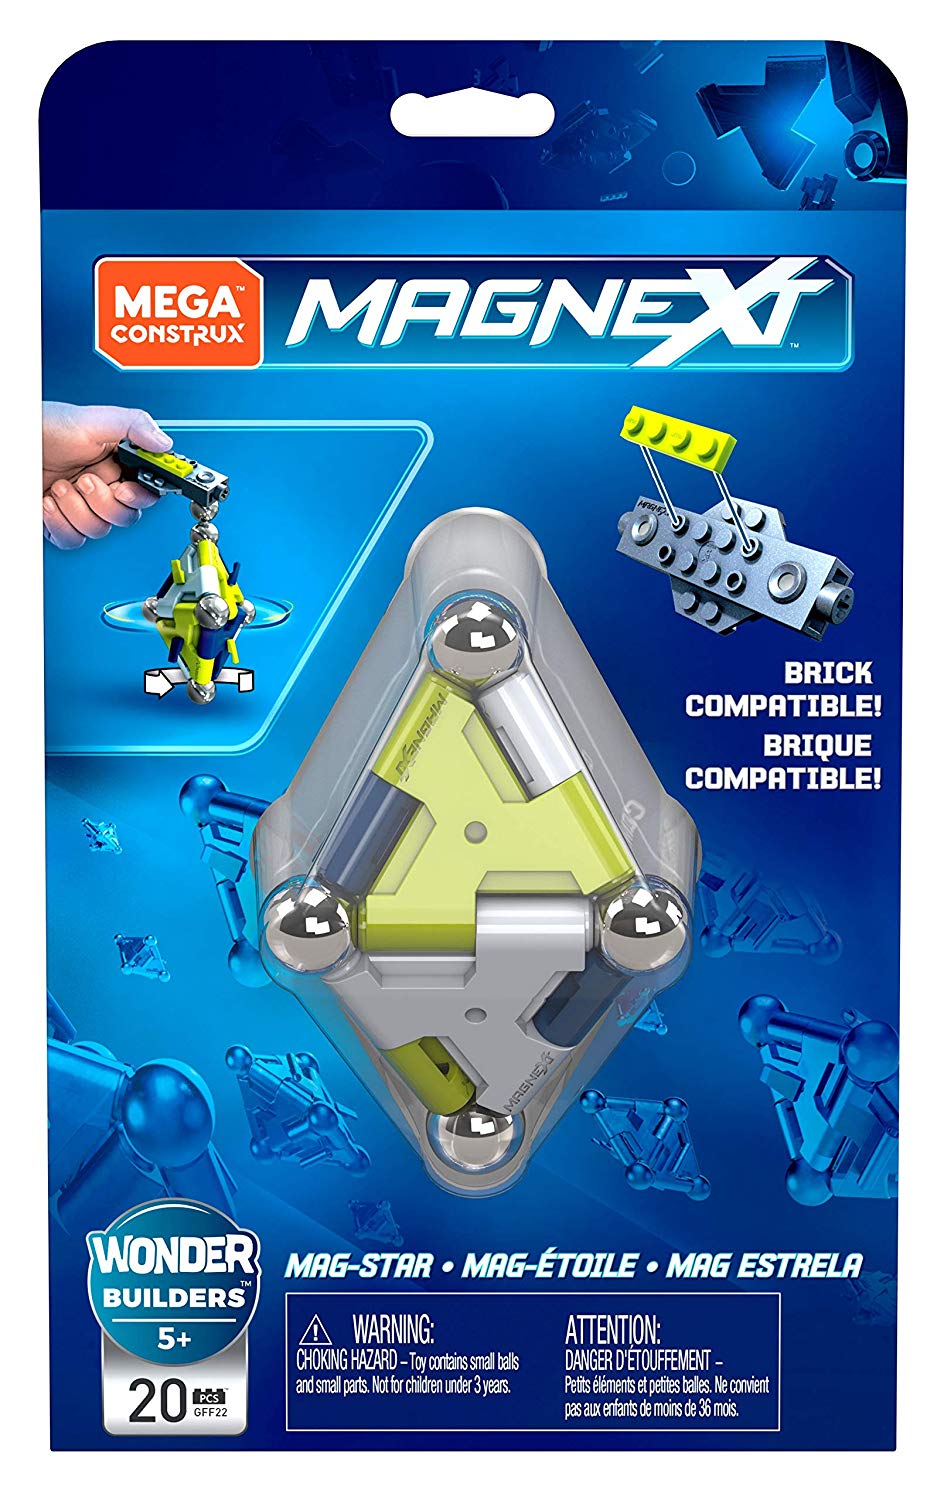 Mattel Mega Construx Gff22 Magnext Magstar